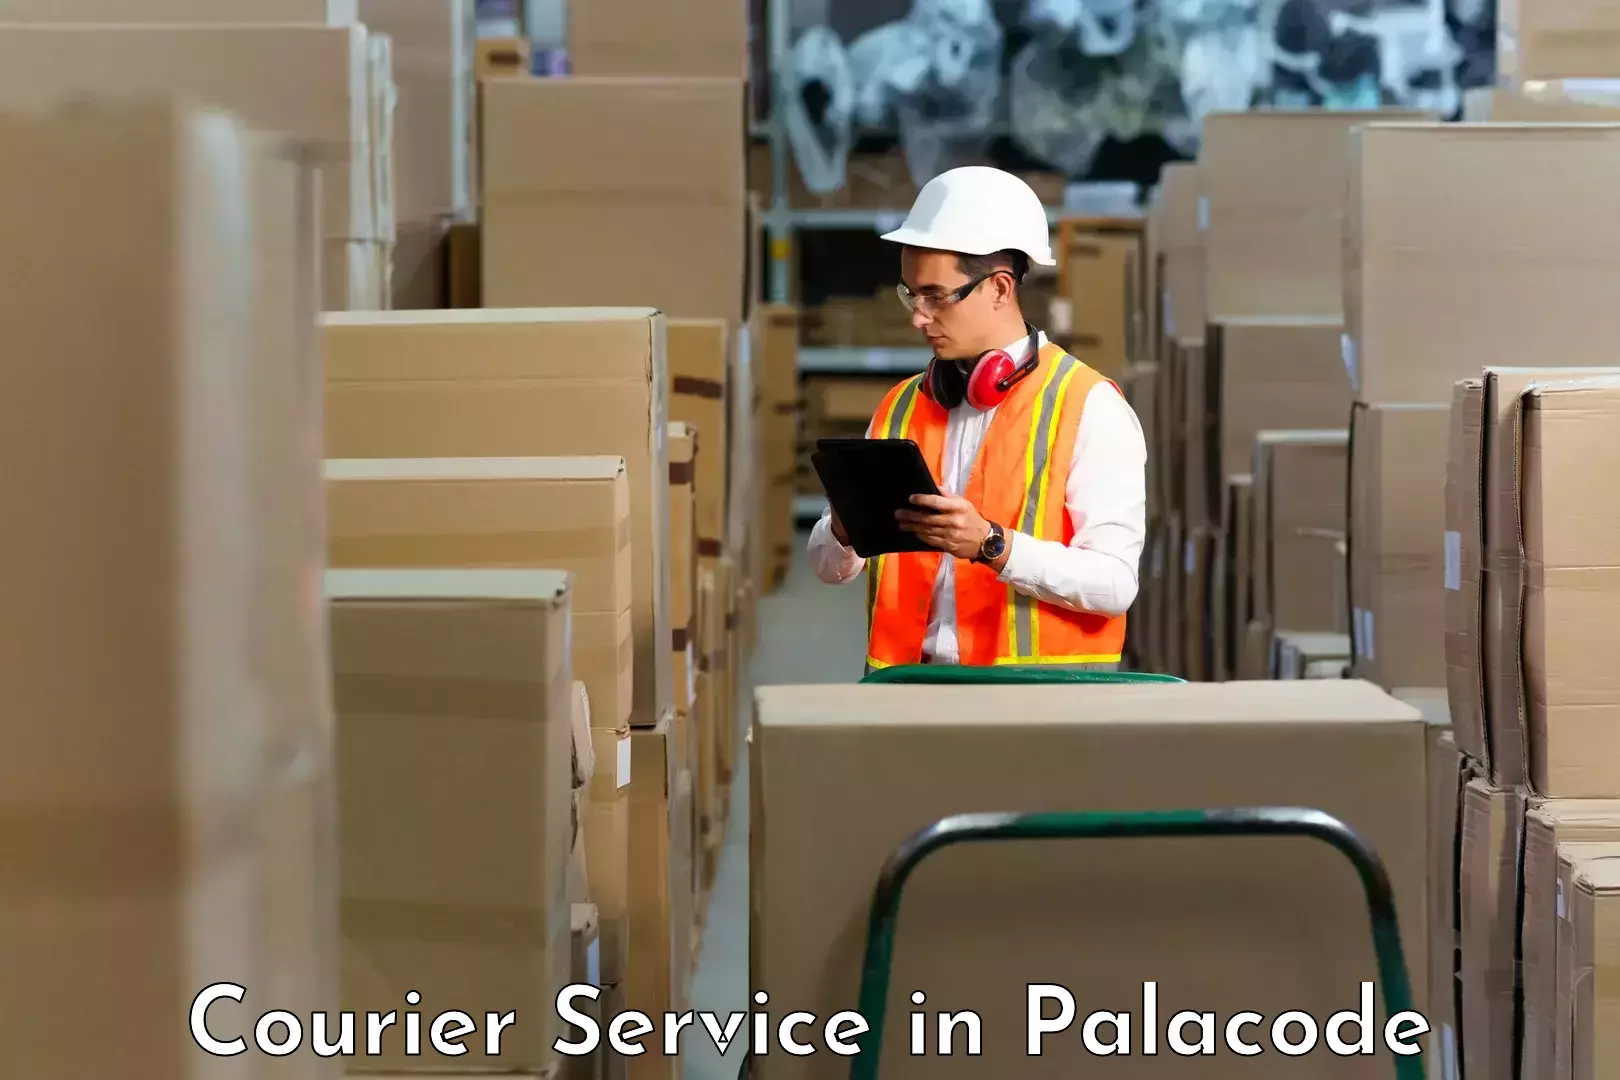 E-commerce fulfillment in Palacode